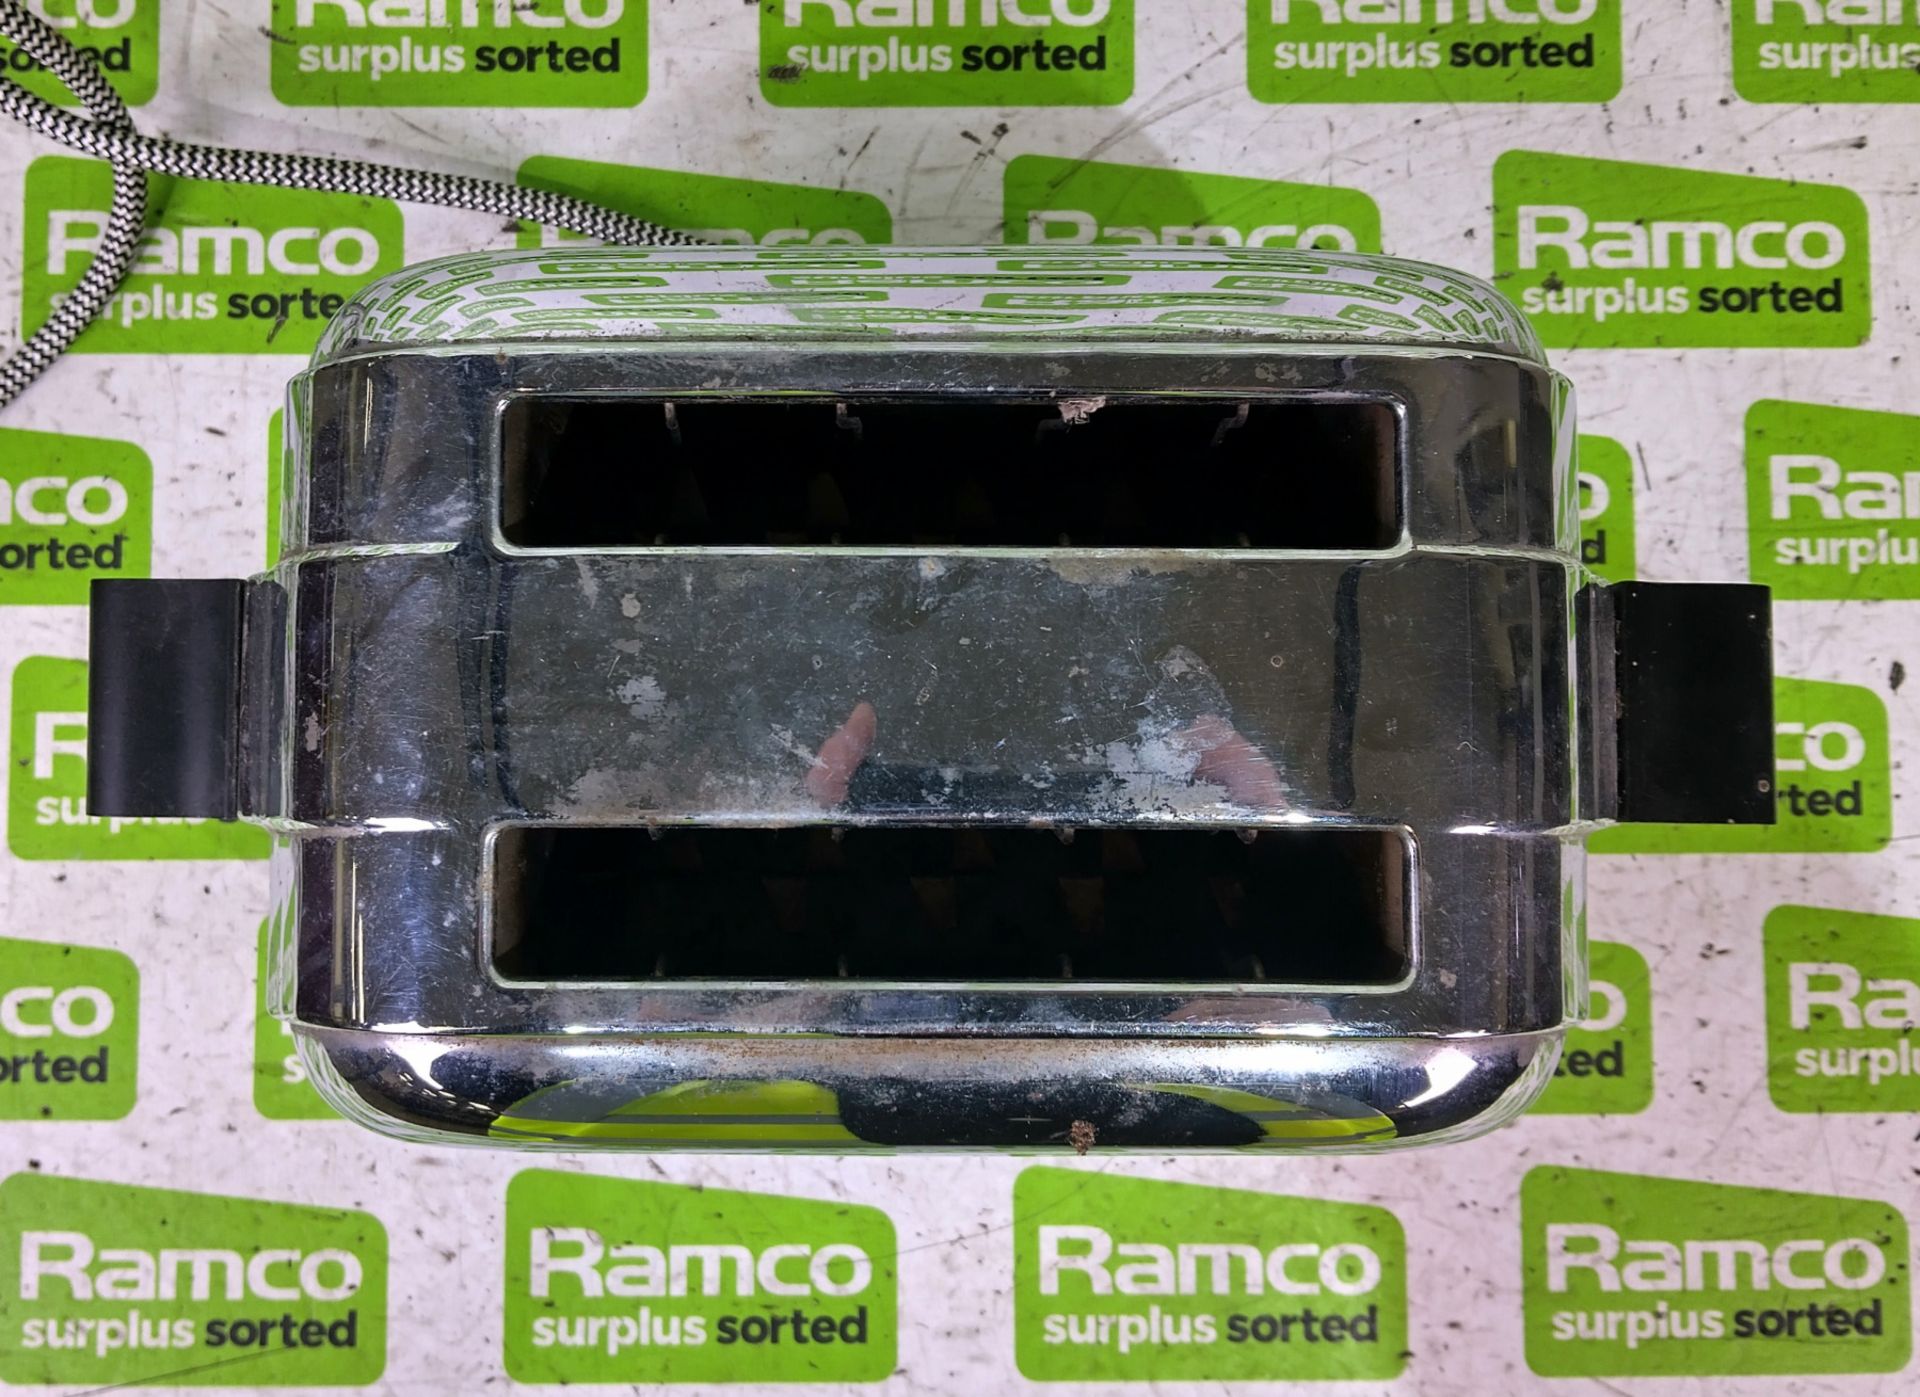 Morphy Richards TA/1 2 slice toaster - Image 2 of 3